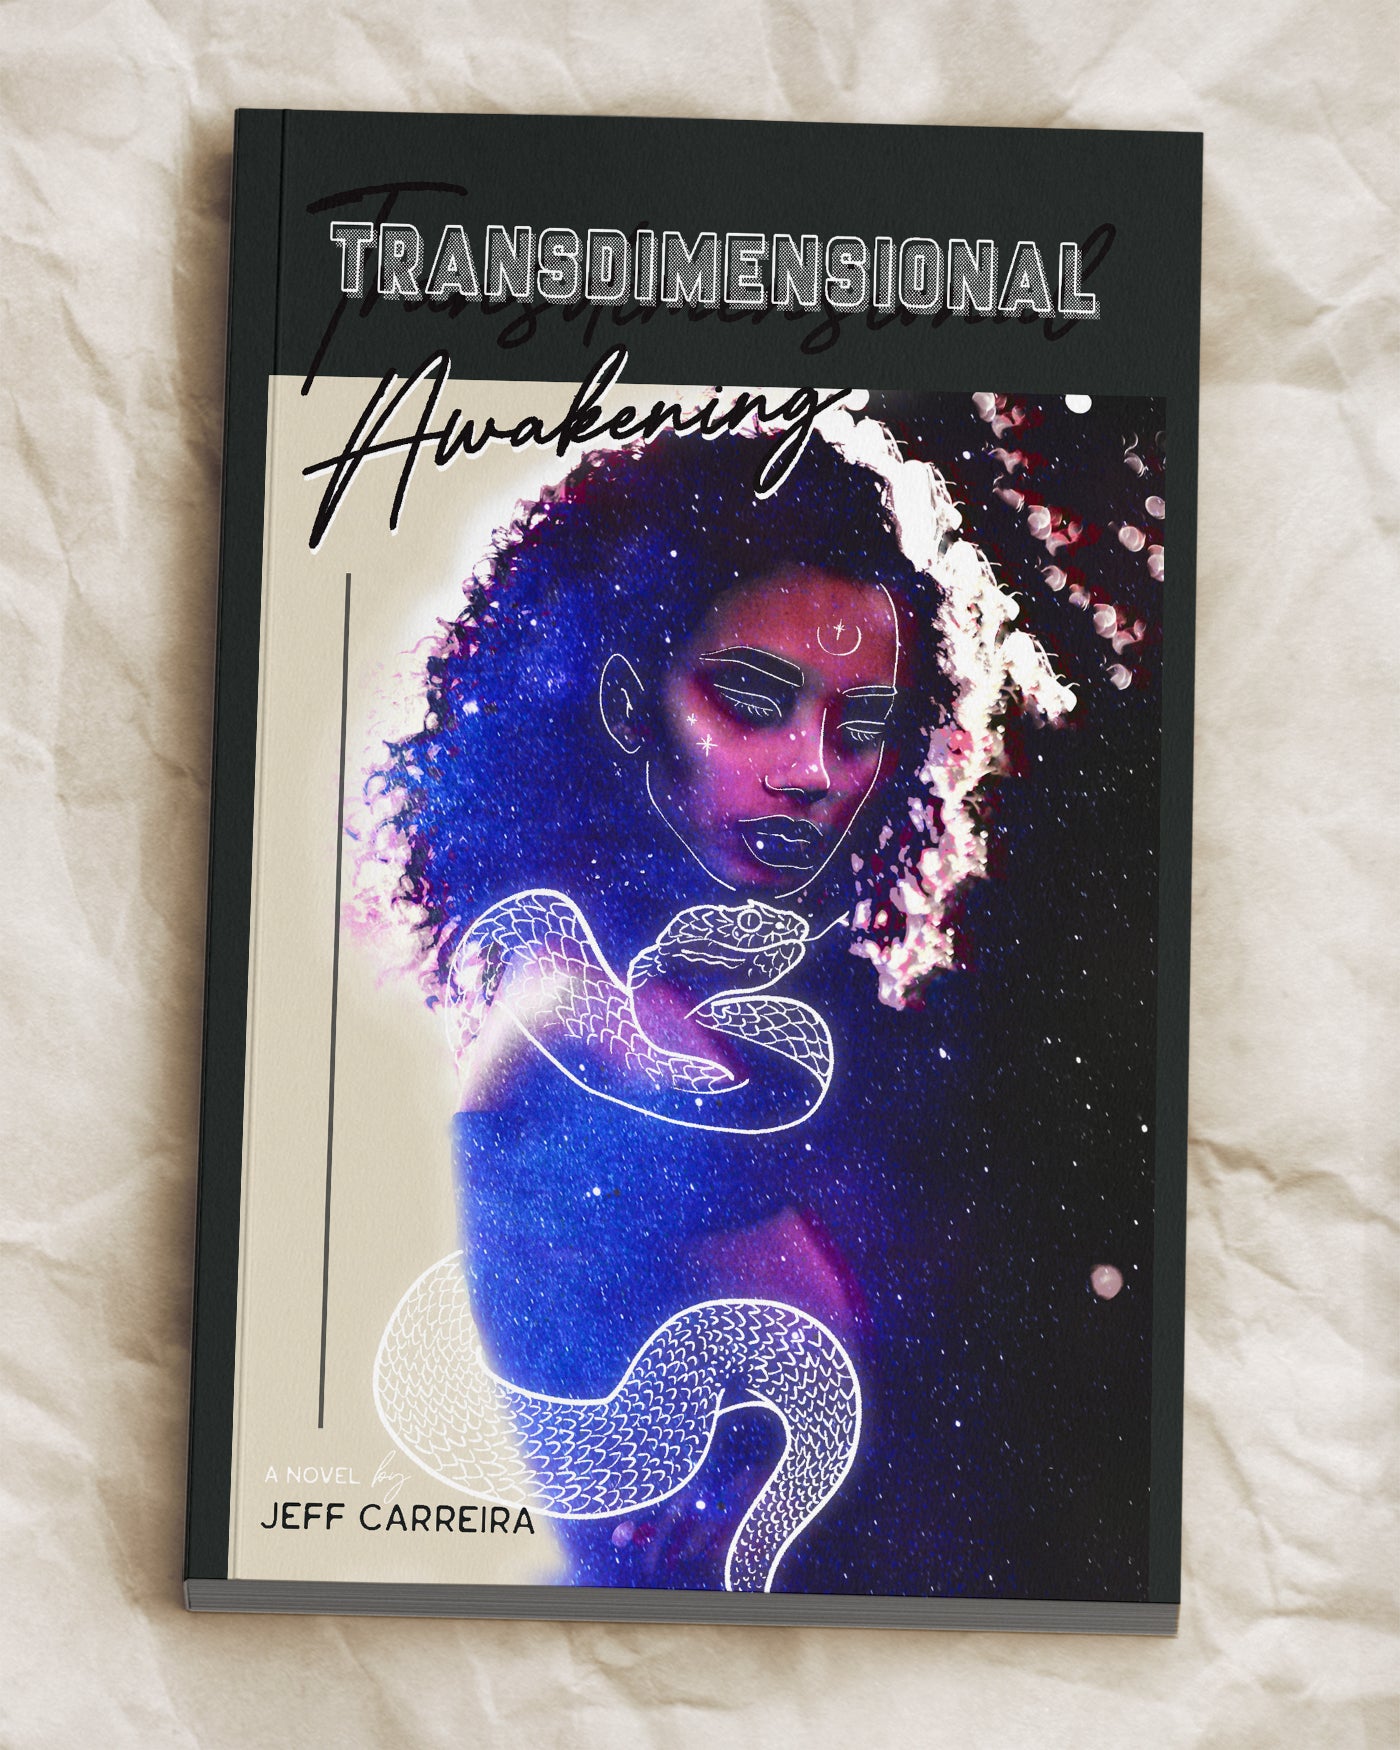 Transdimensional Awakening: A Novel